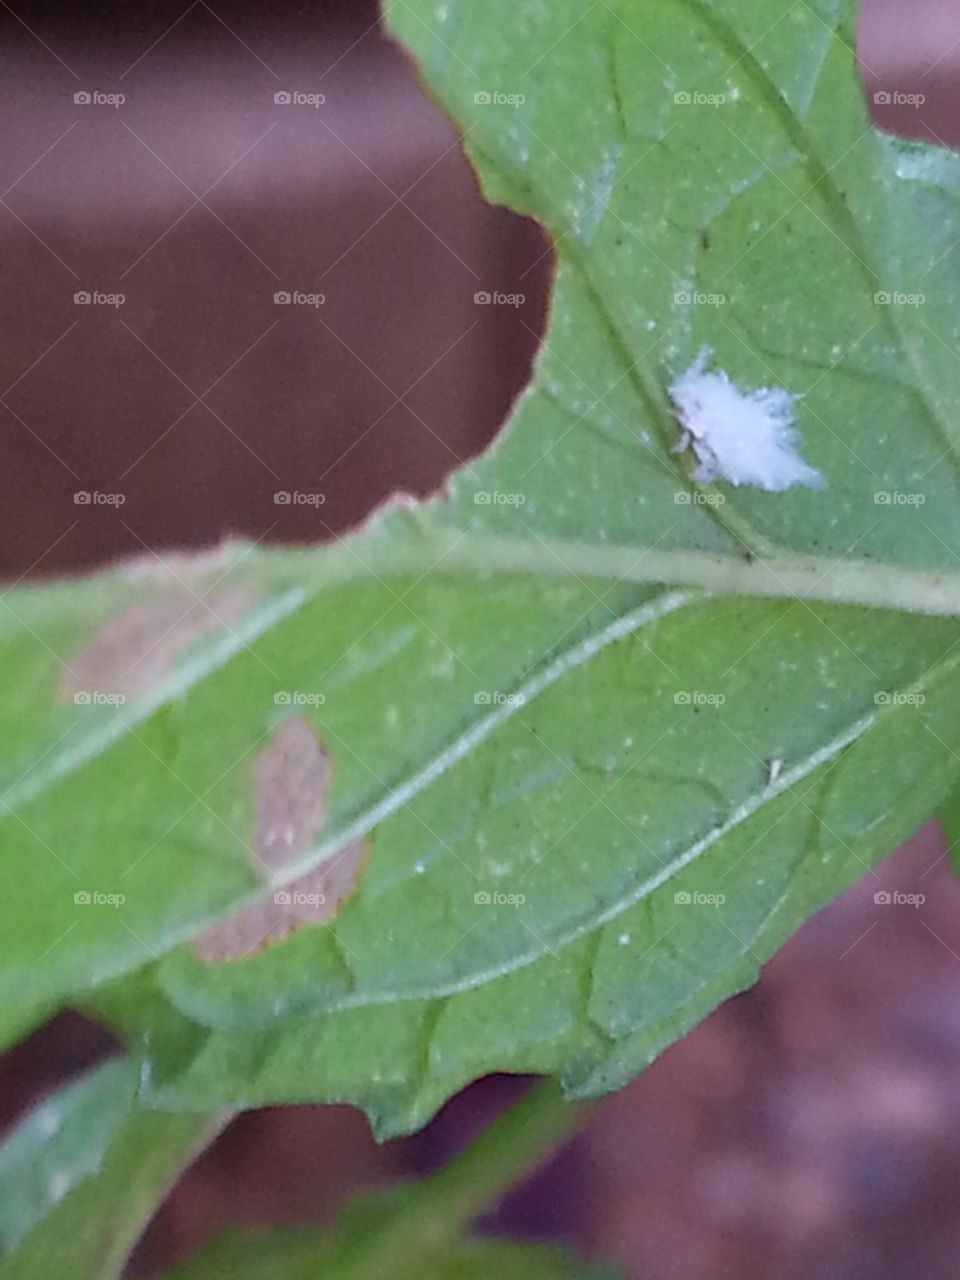 tiny fluffy hairy white caterpillar on my mint plant